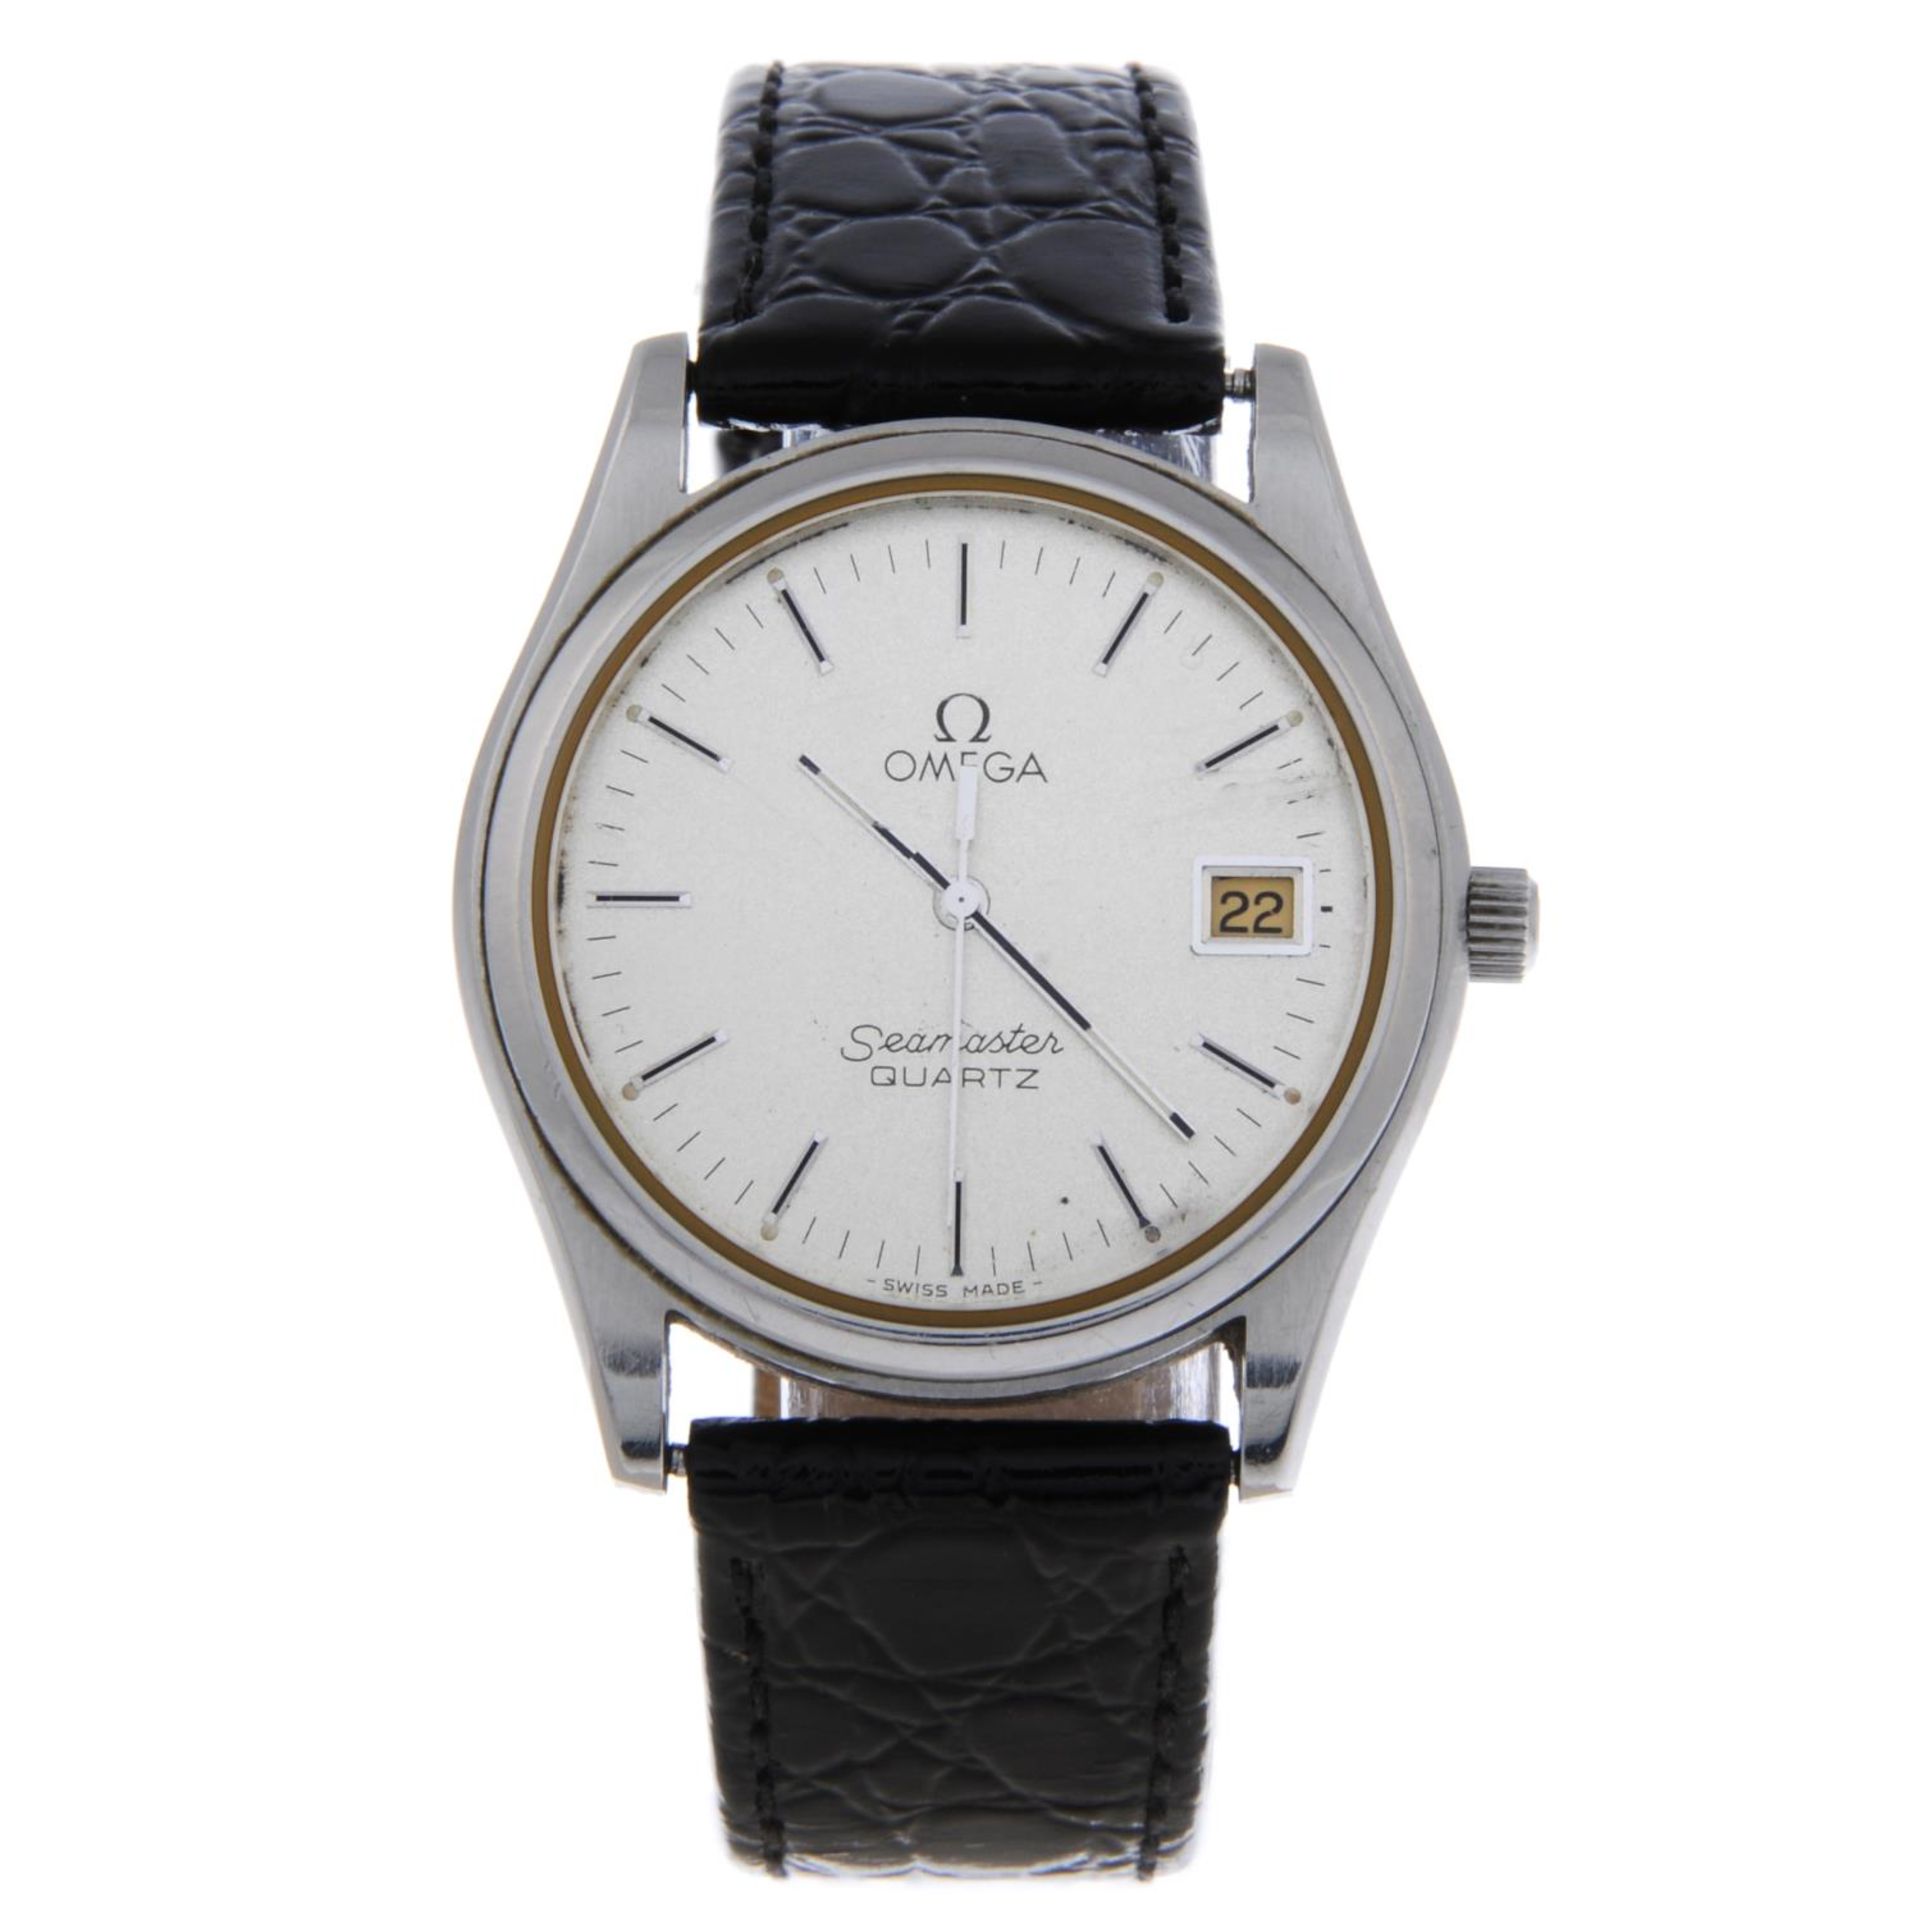 OMEGA - a gentleman's Seamaster wrist watch.